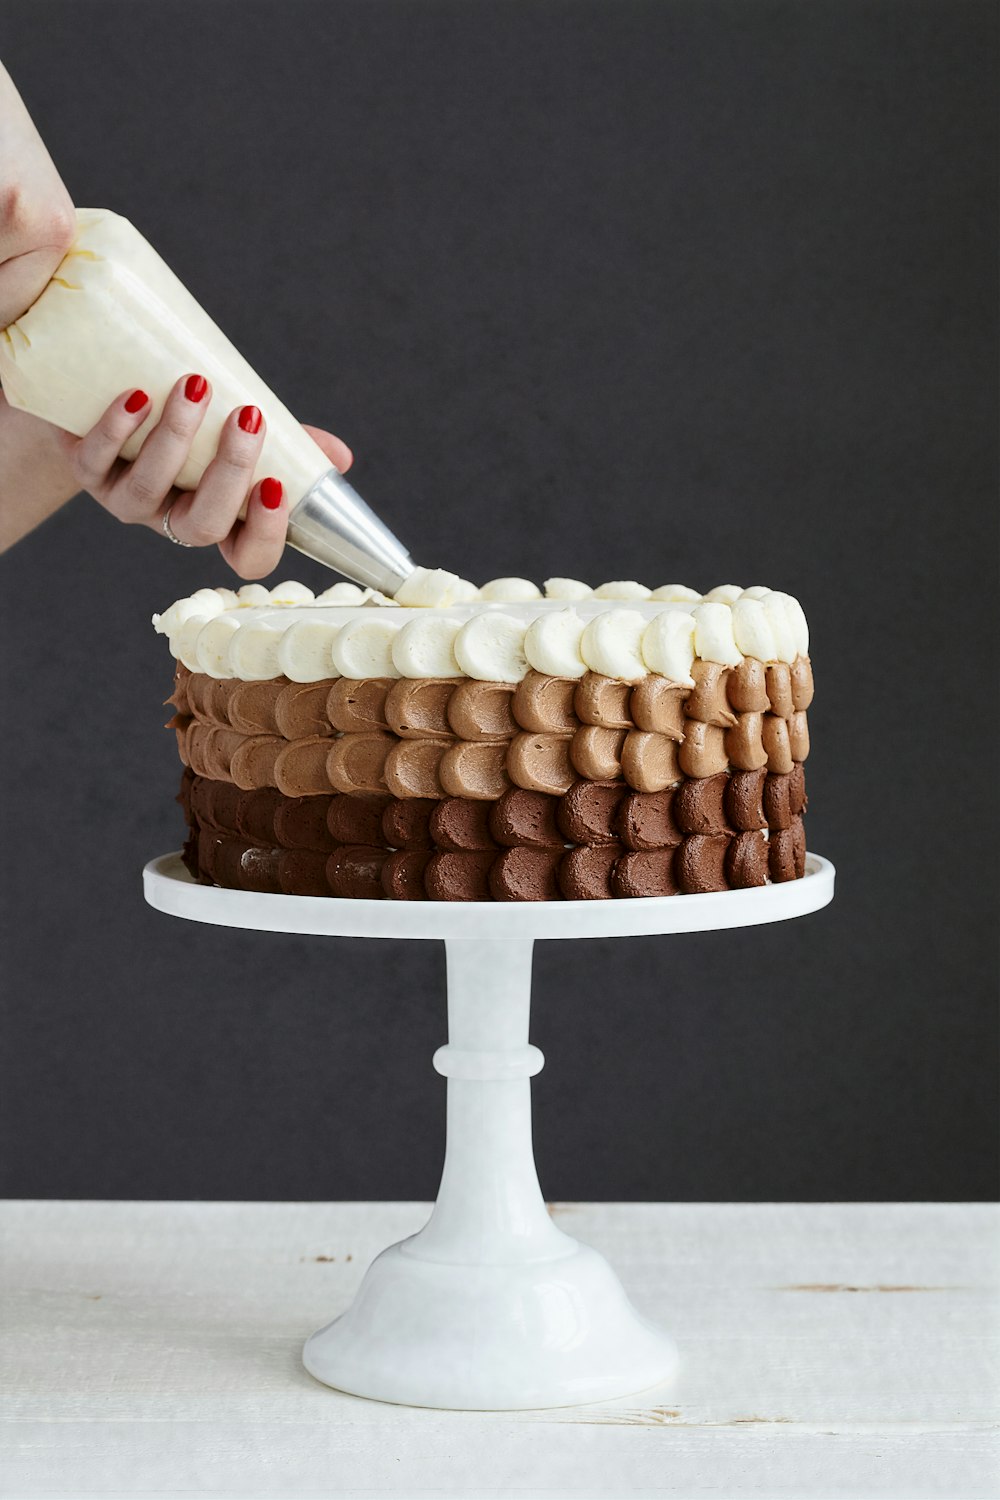 30k+ Cake Decorating Pictures  Download Free Images on Unsplash